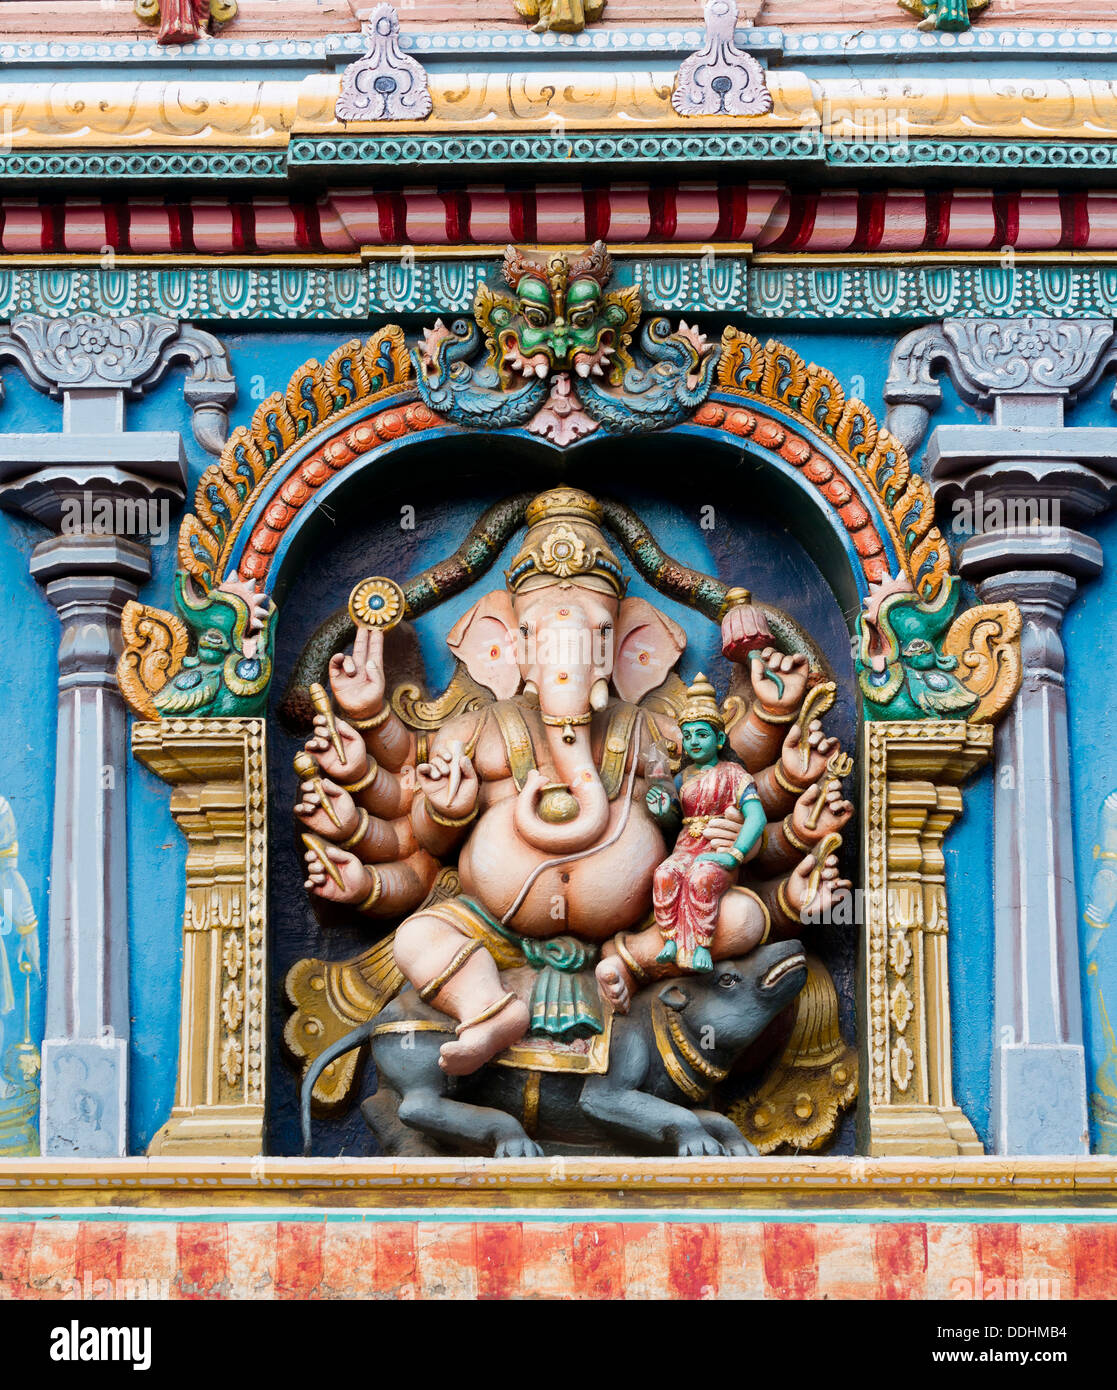 Hindu god Ganesha or Ganpati, the elephant-headed god in a representation with ten arms on a temple wall, Meenakshi Amman Temple Stock Photo